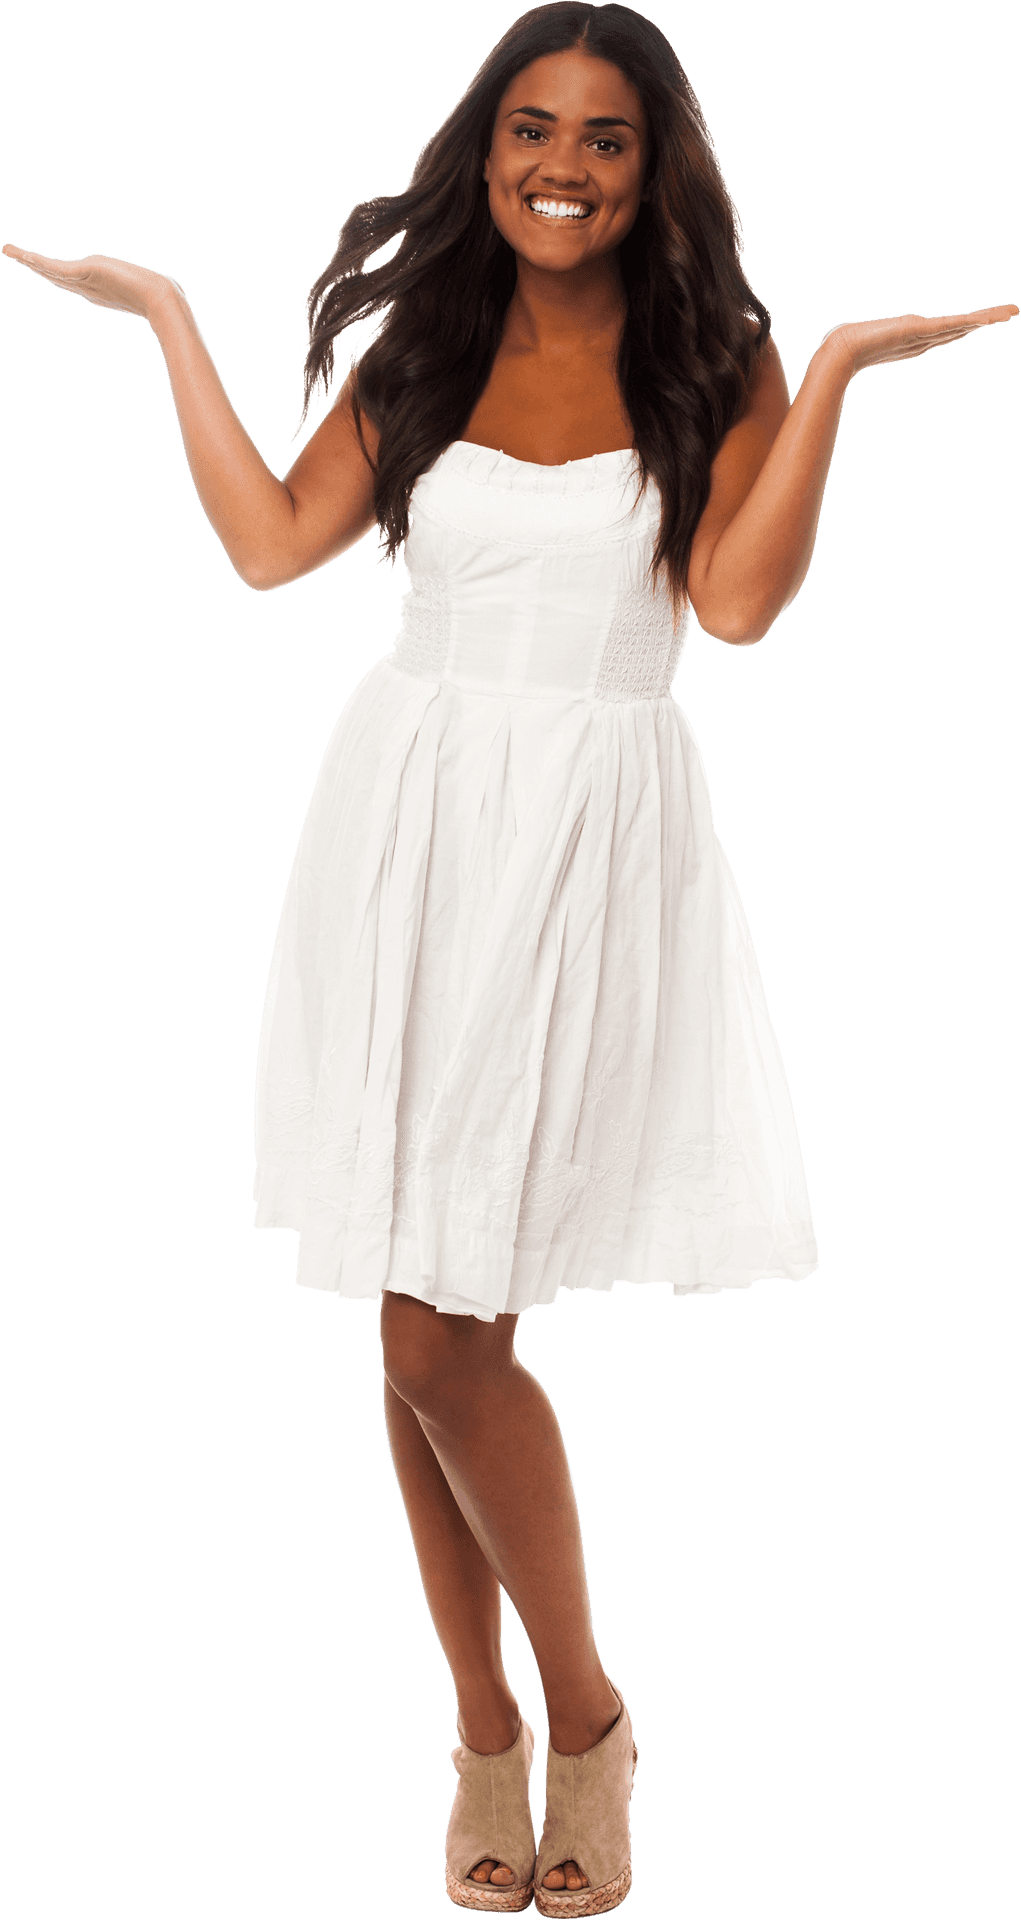 Summer White Dress Fashion Model PNG